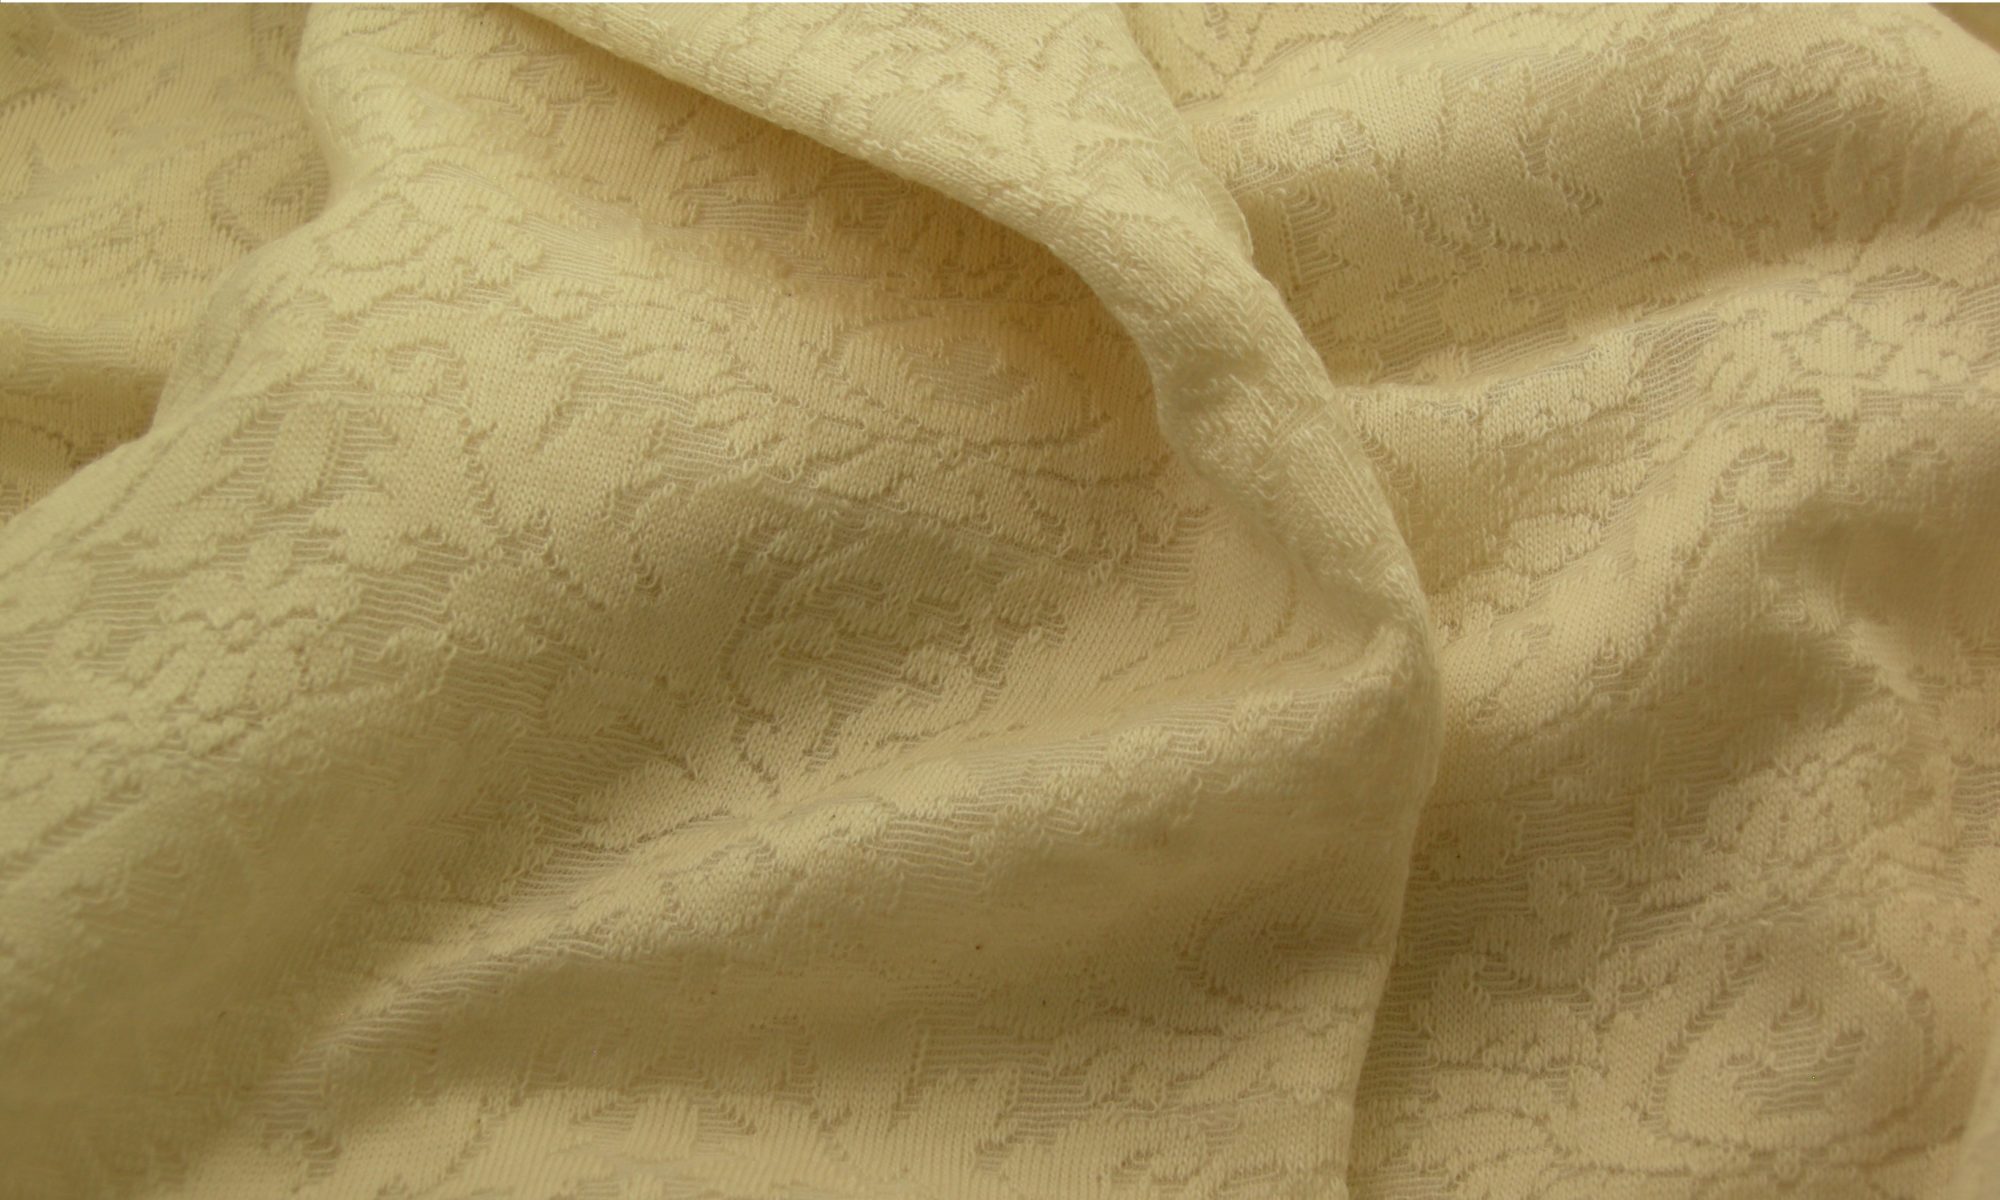 ART 7156 knit jersey transparent jacquard shirt jacket fabric WIDTH cm160 WEIGHT gr200 COMPOSITION 78 cotton 22 polyammide - 200mts